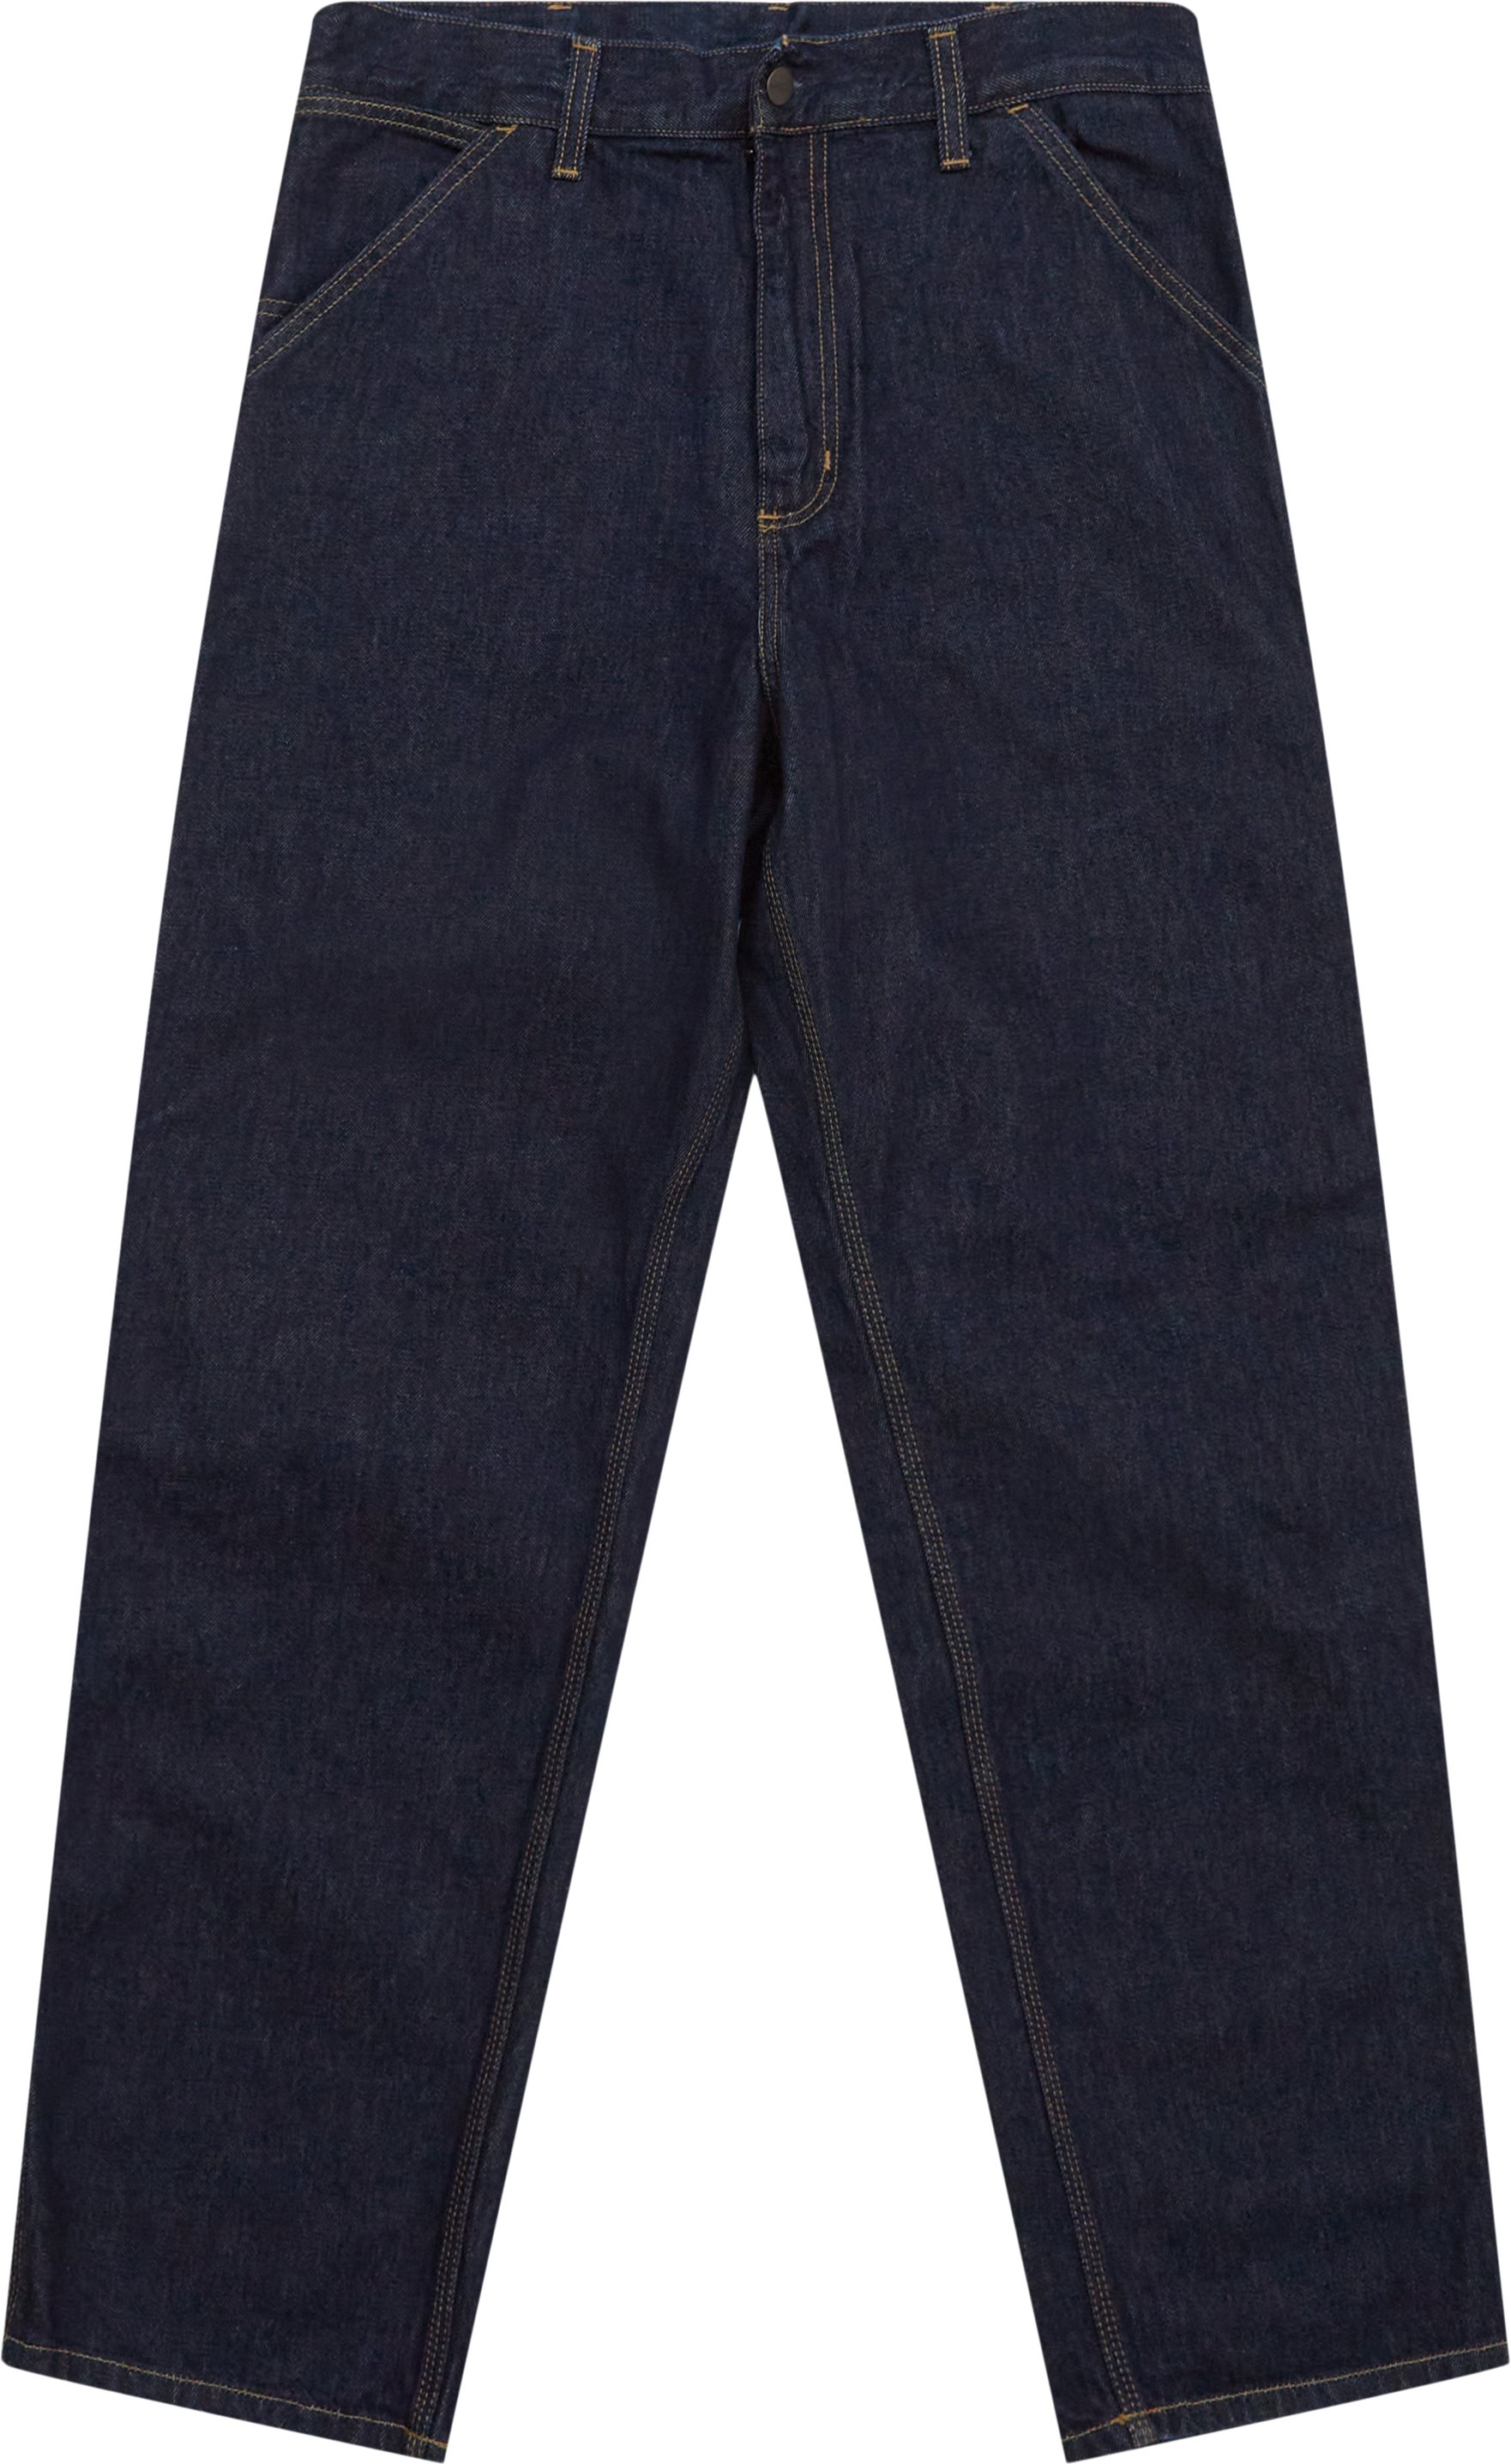 Carhartt WIP Jeans SINGLE KNEE PANT I032024.0102 Blue